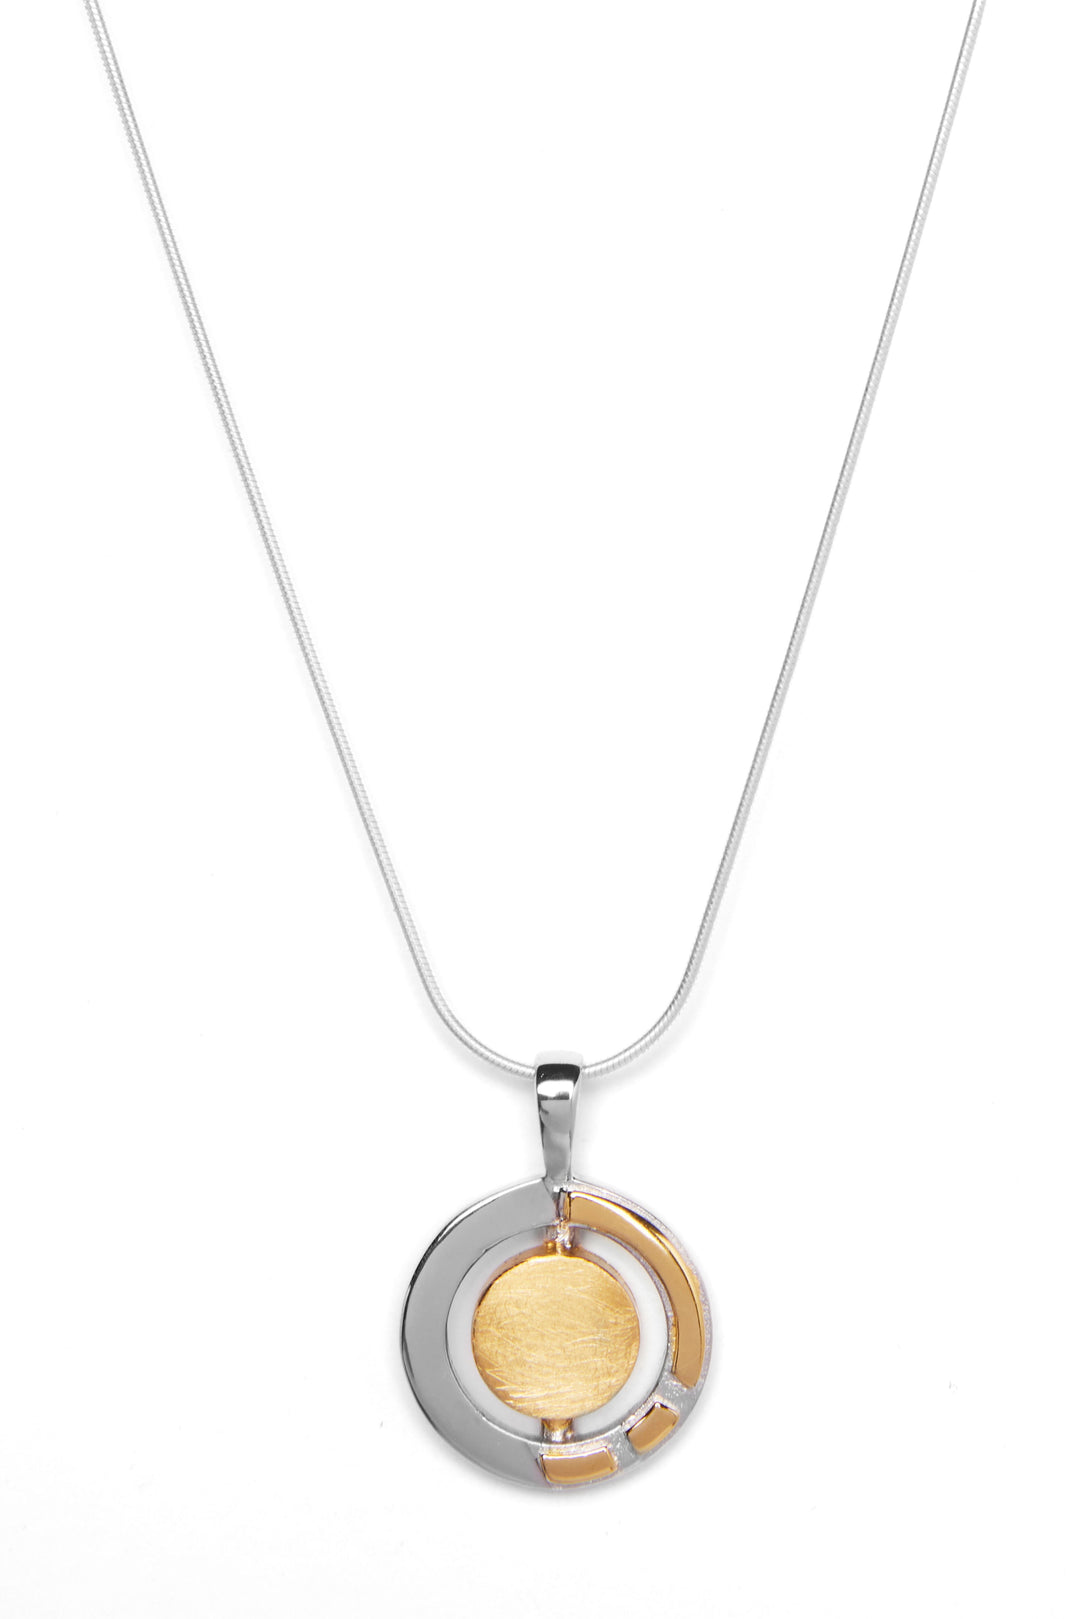 Uru Pendant necklace in silver & gold-Gallardo & Blaine Designs